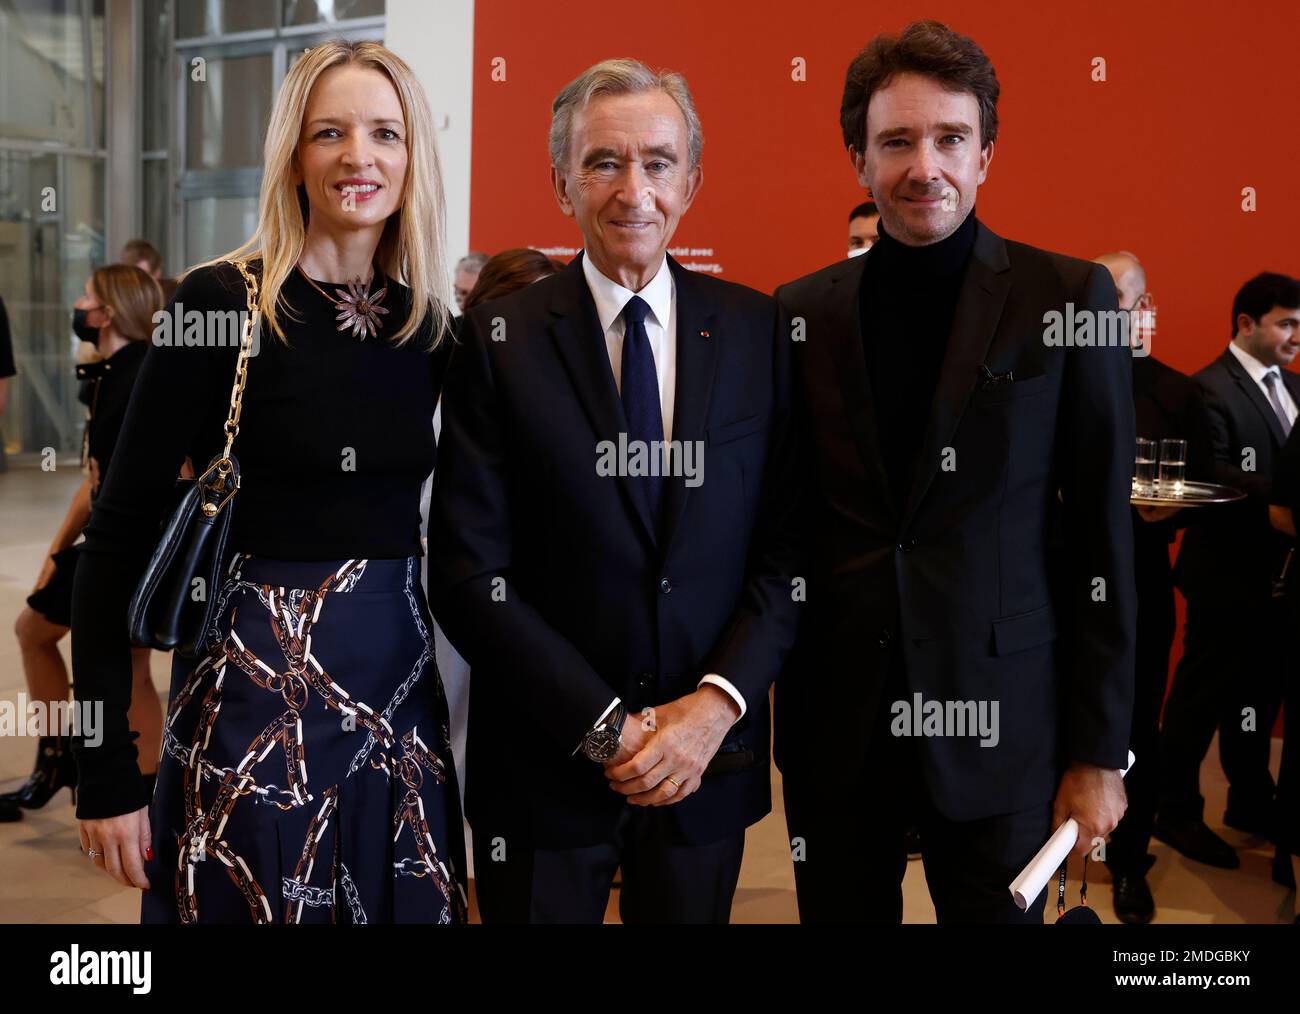 Bernard Arnault makes daughter Delphine Arnault Dior CEO, but is